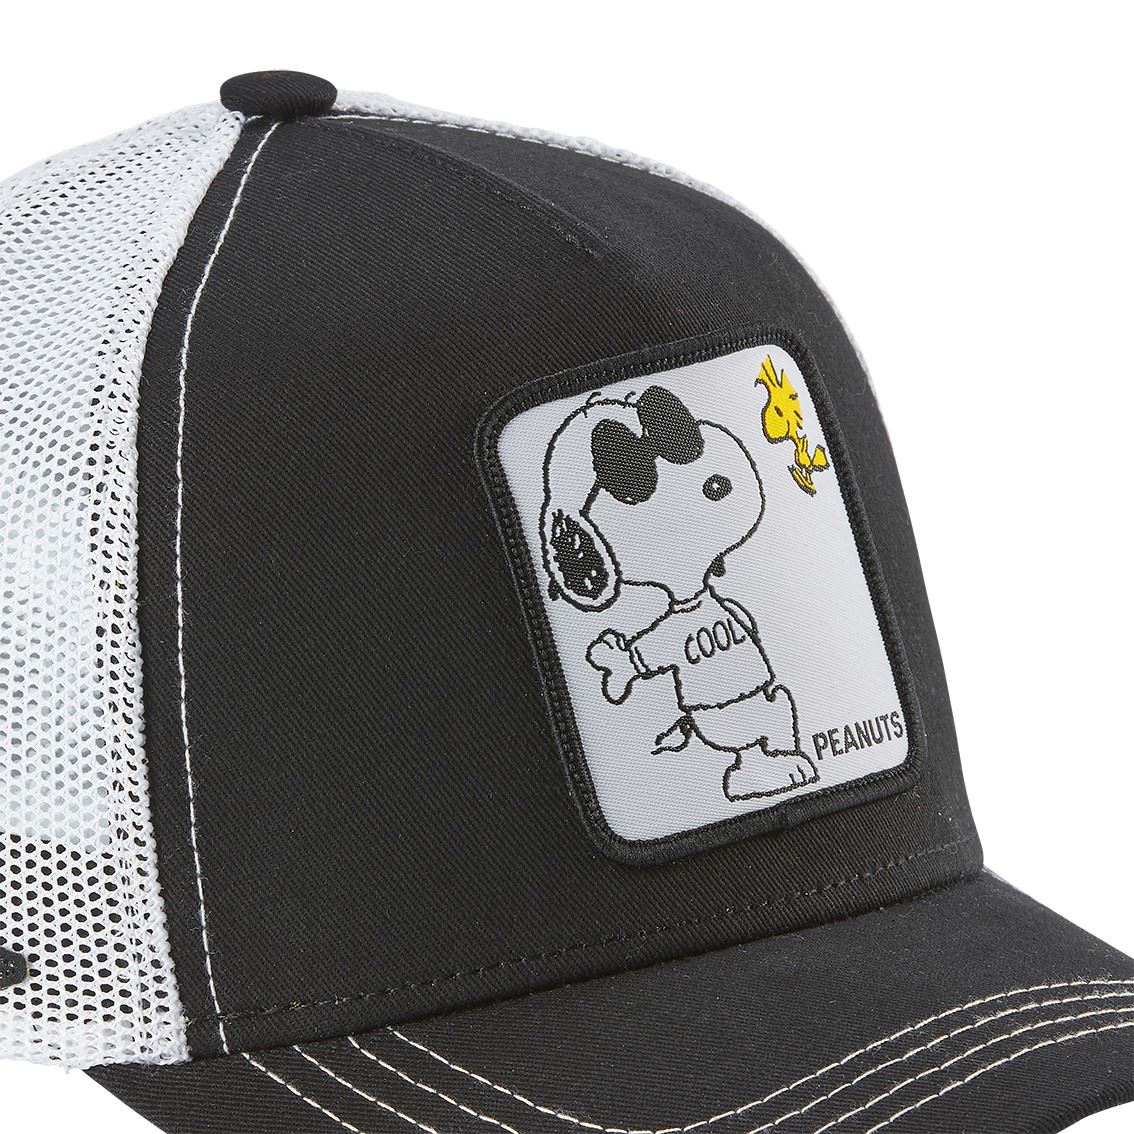 Snoopy The Peanuts Black White Trucker Cap Capslab